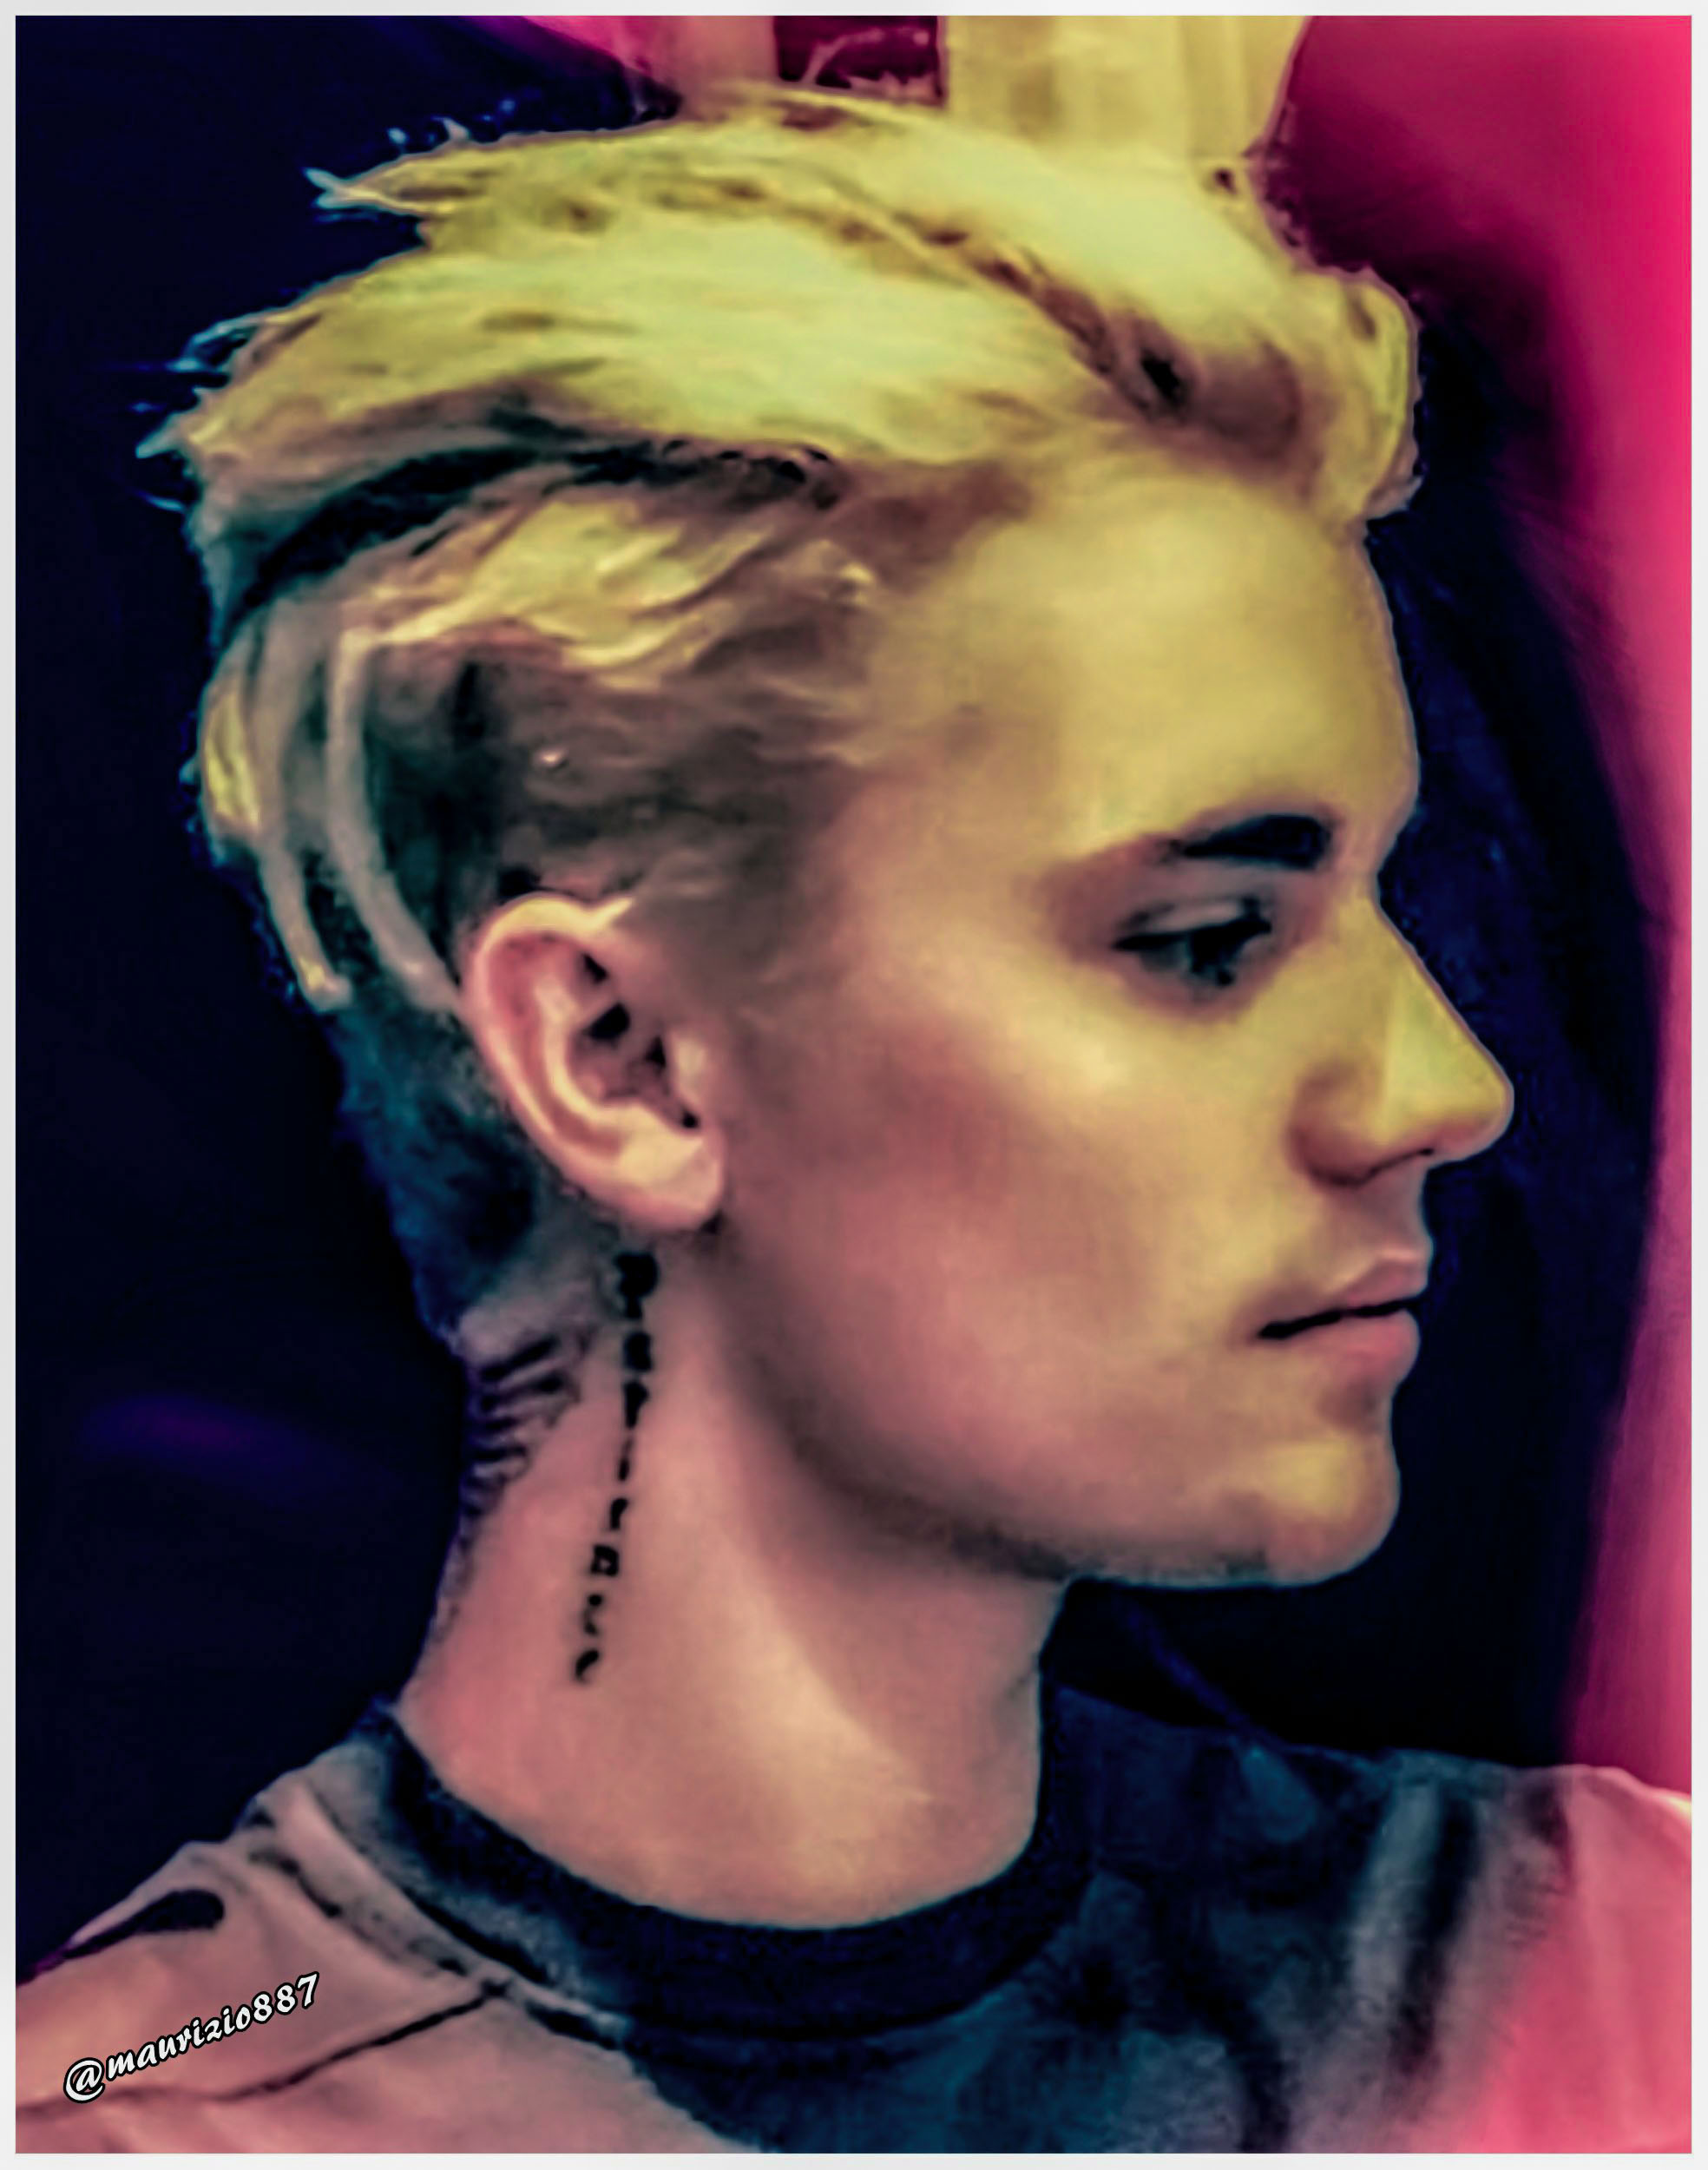 Justin Bieber images justin bieber 2016 HD wallpaper and